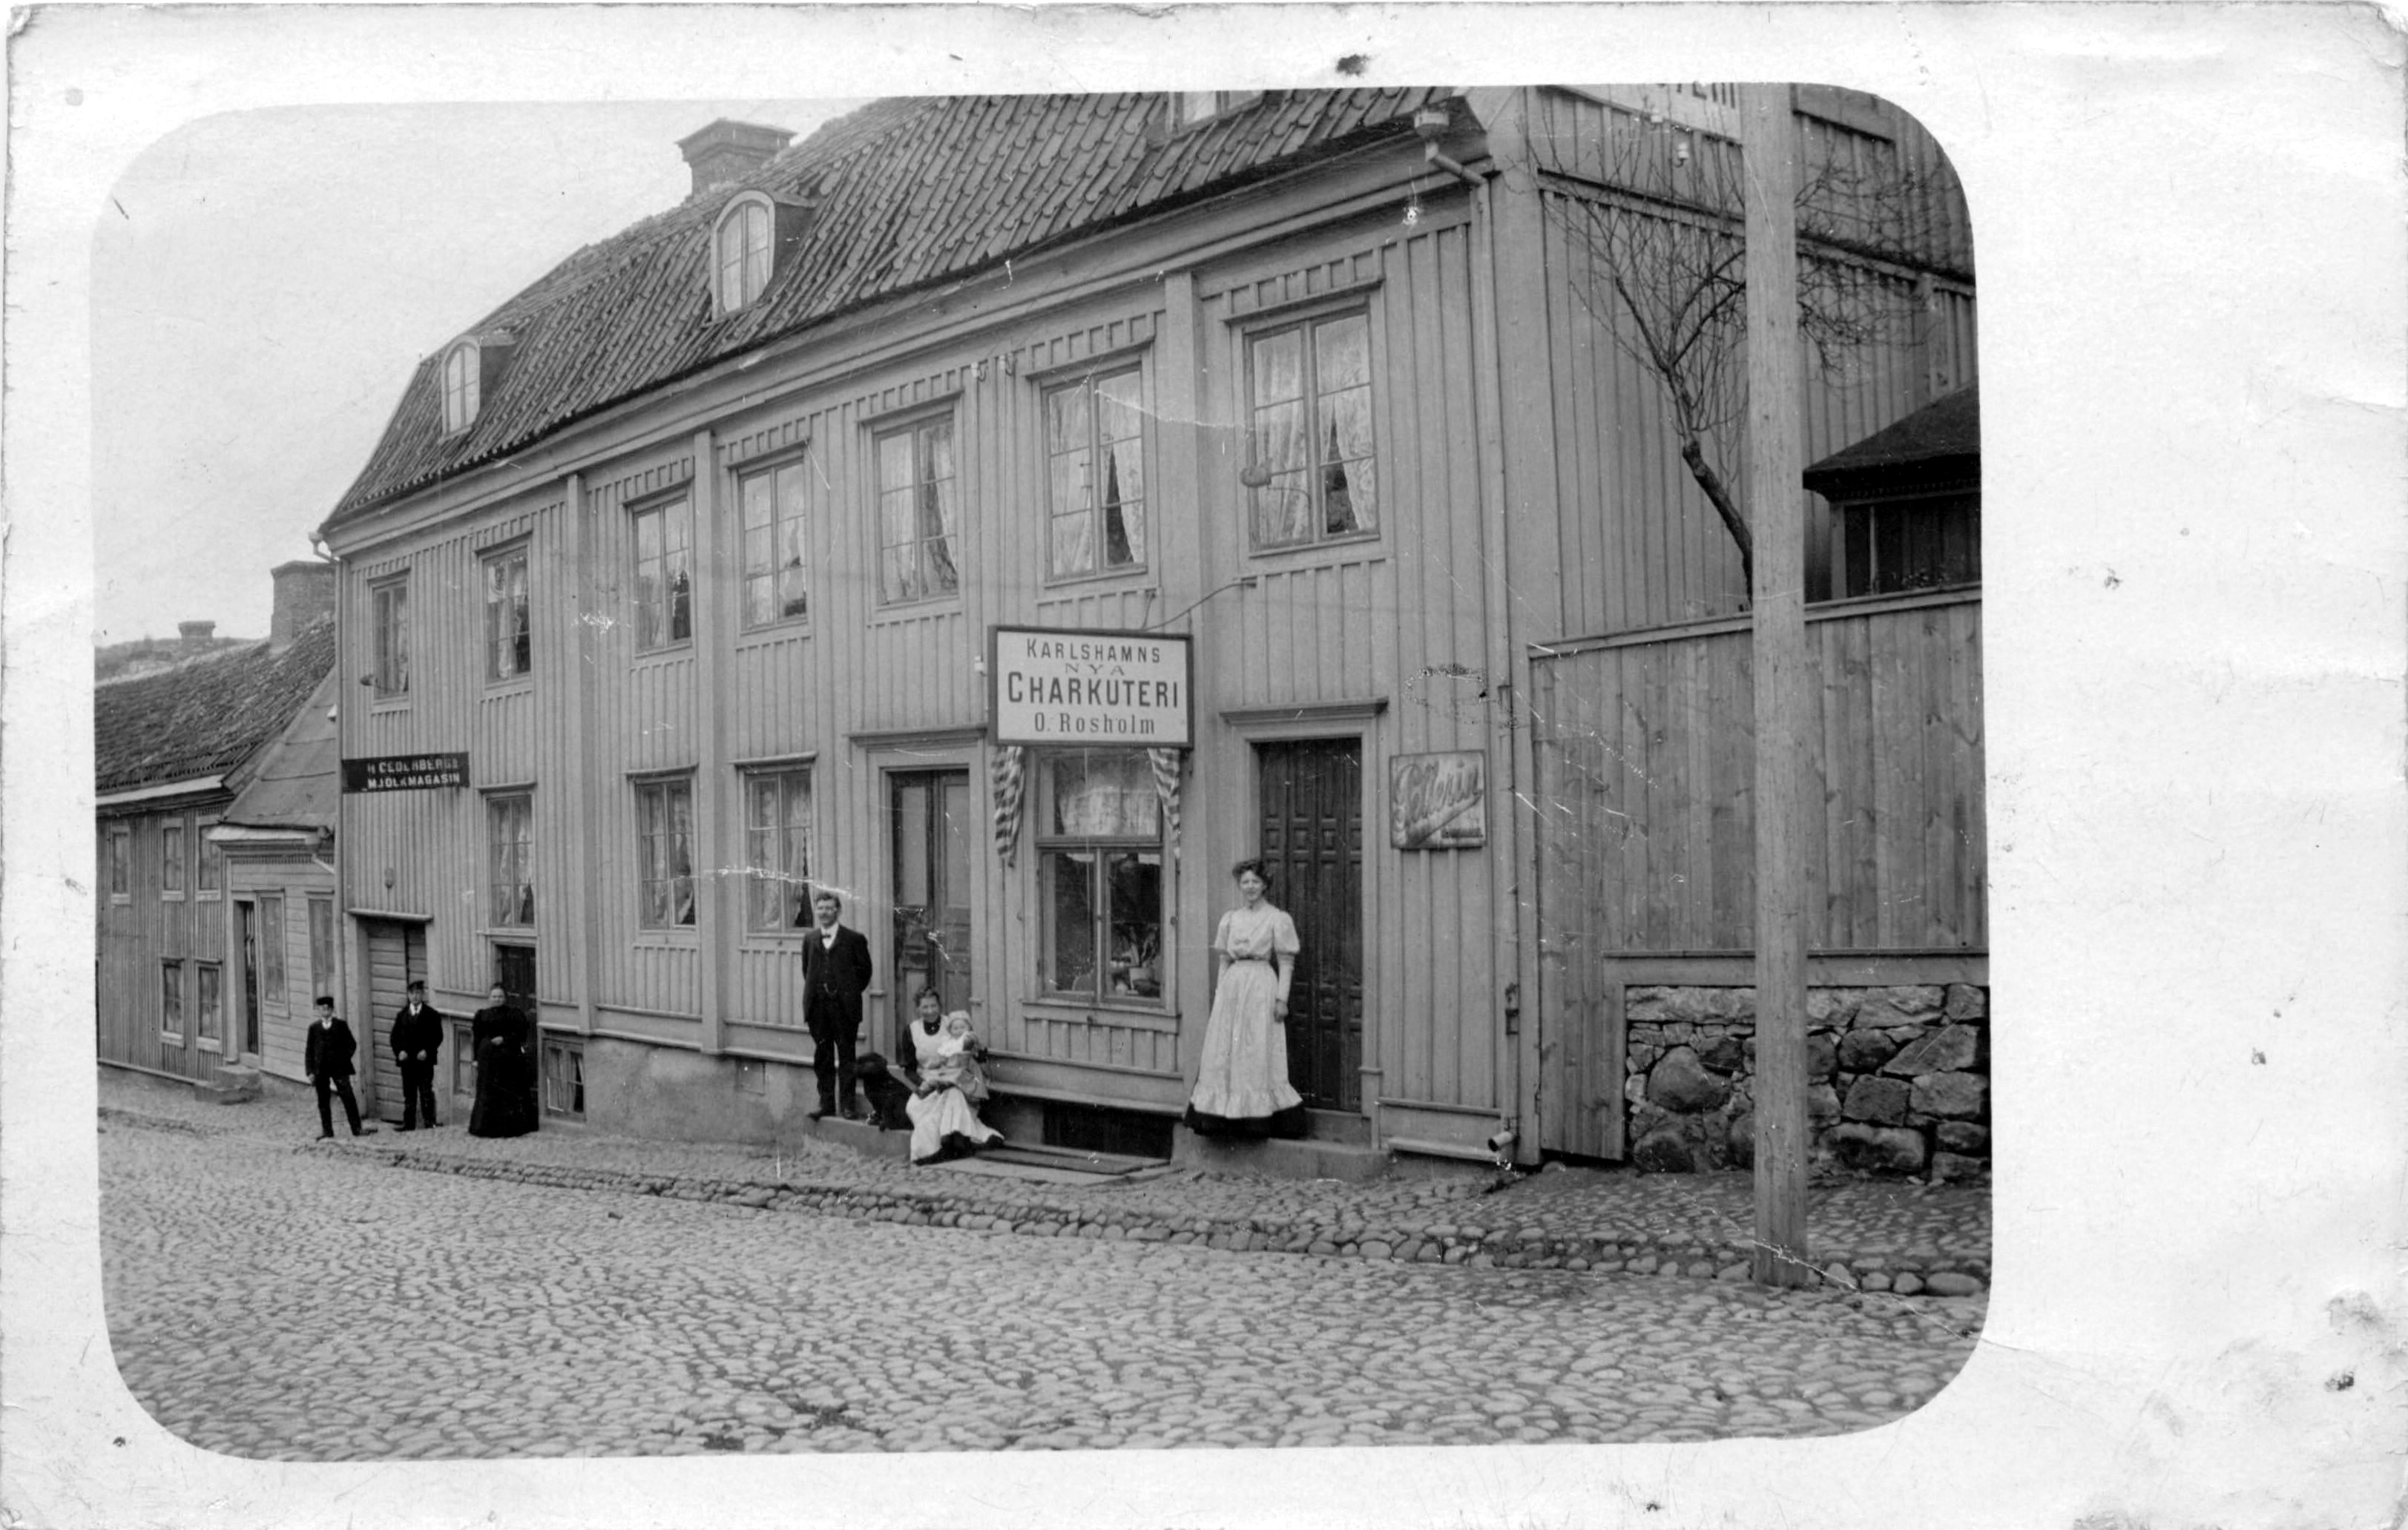 Karlshamns nya Charkuteri - bild från sensommaren 1906.













